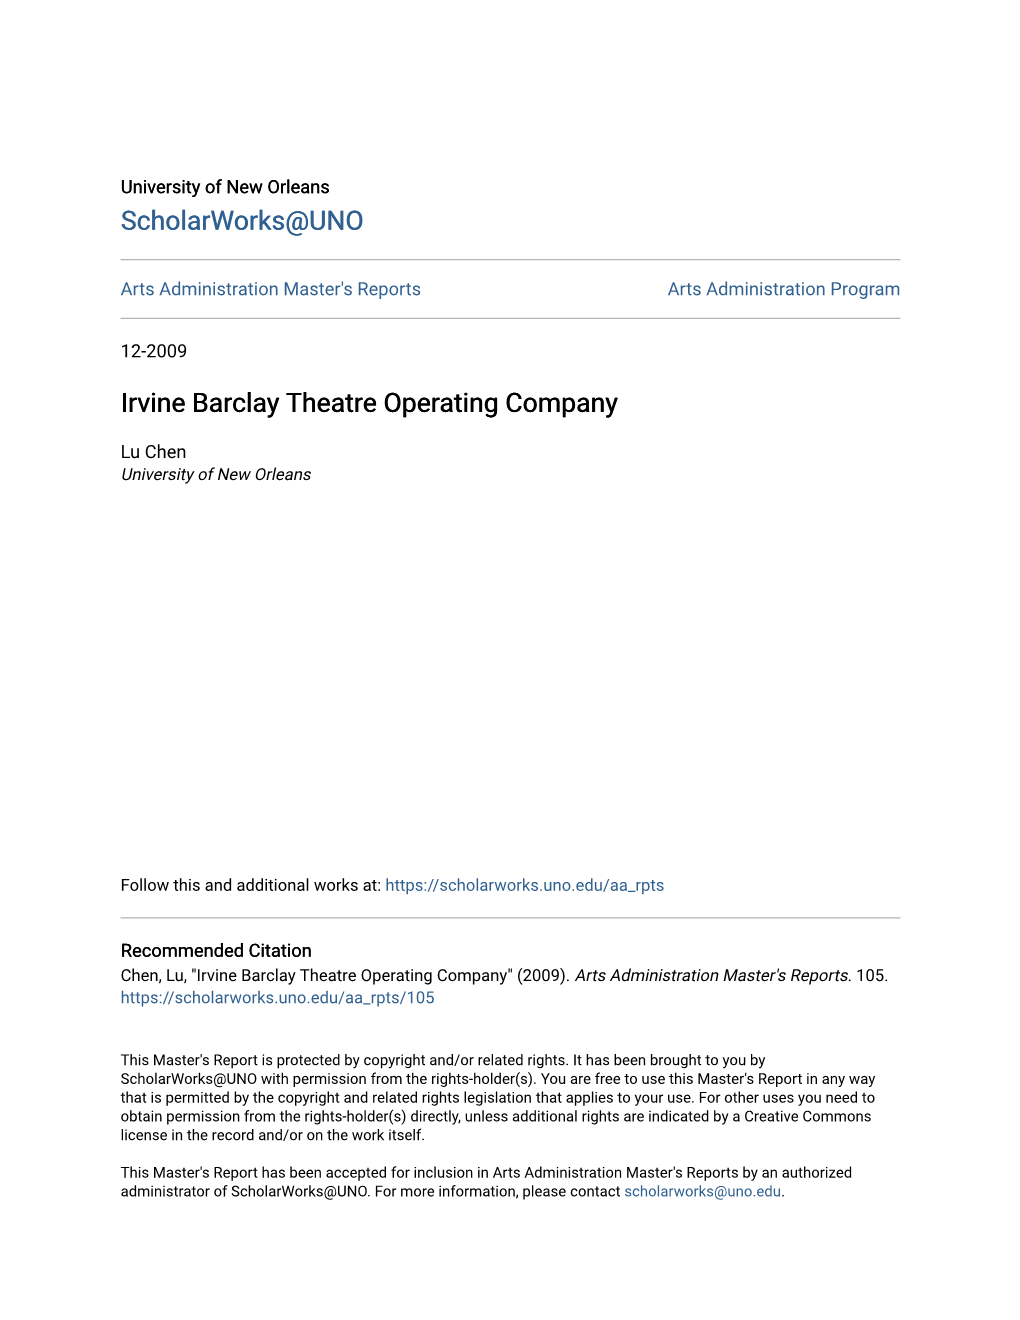 Irvine Barclay Theatre Operating Company